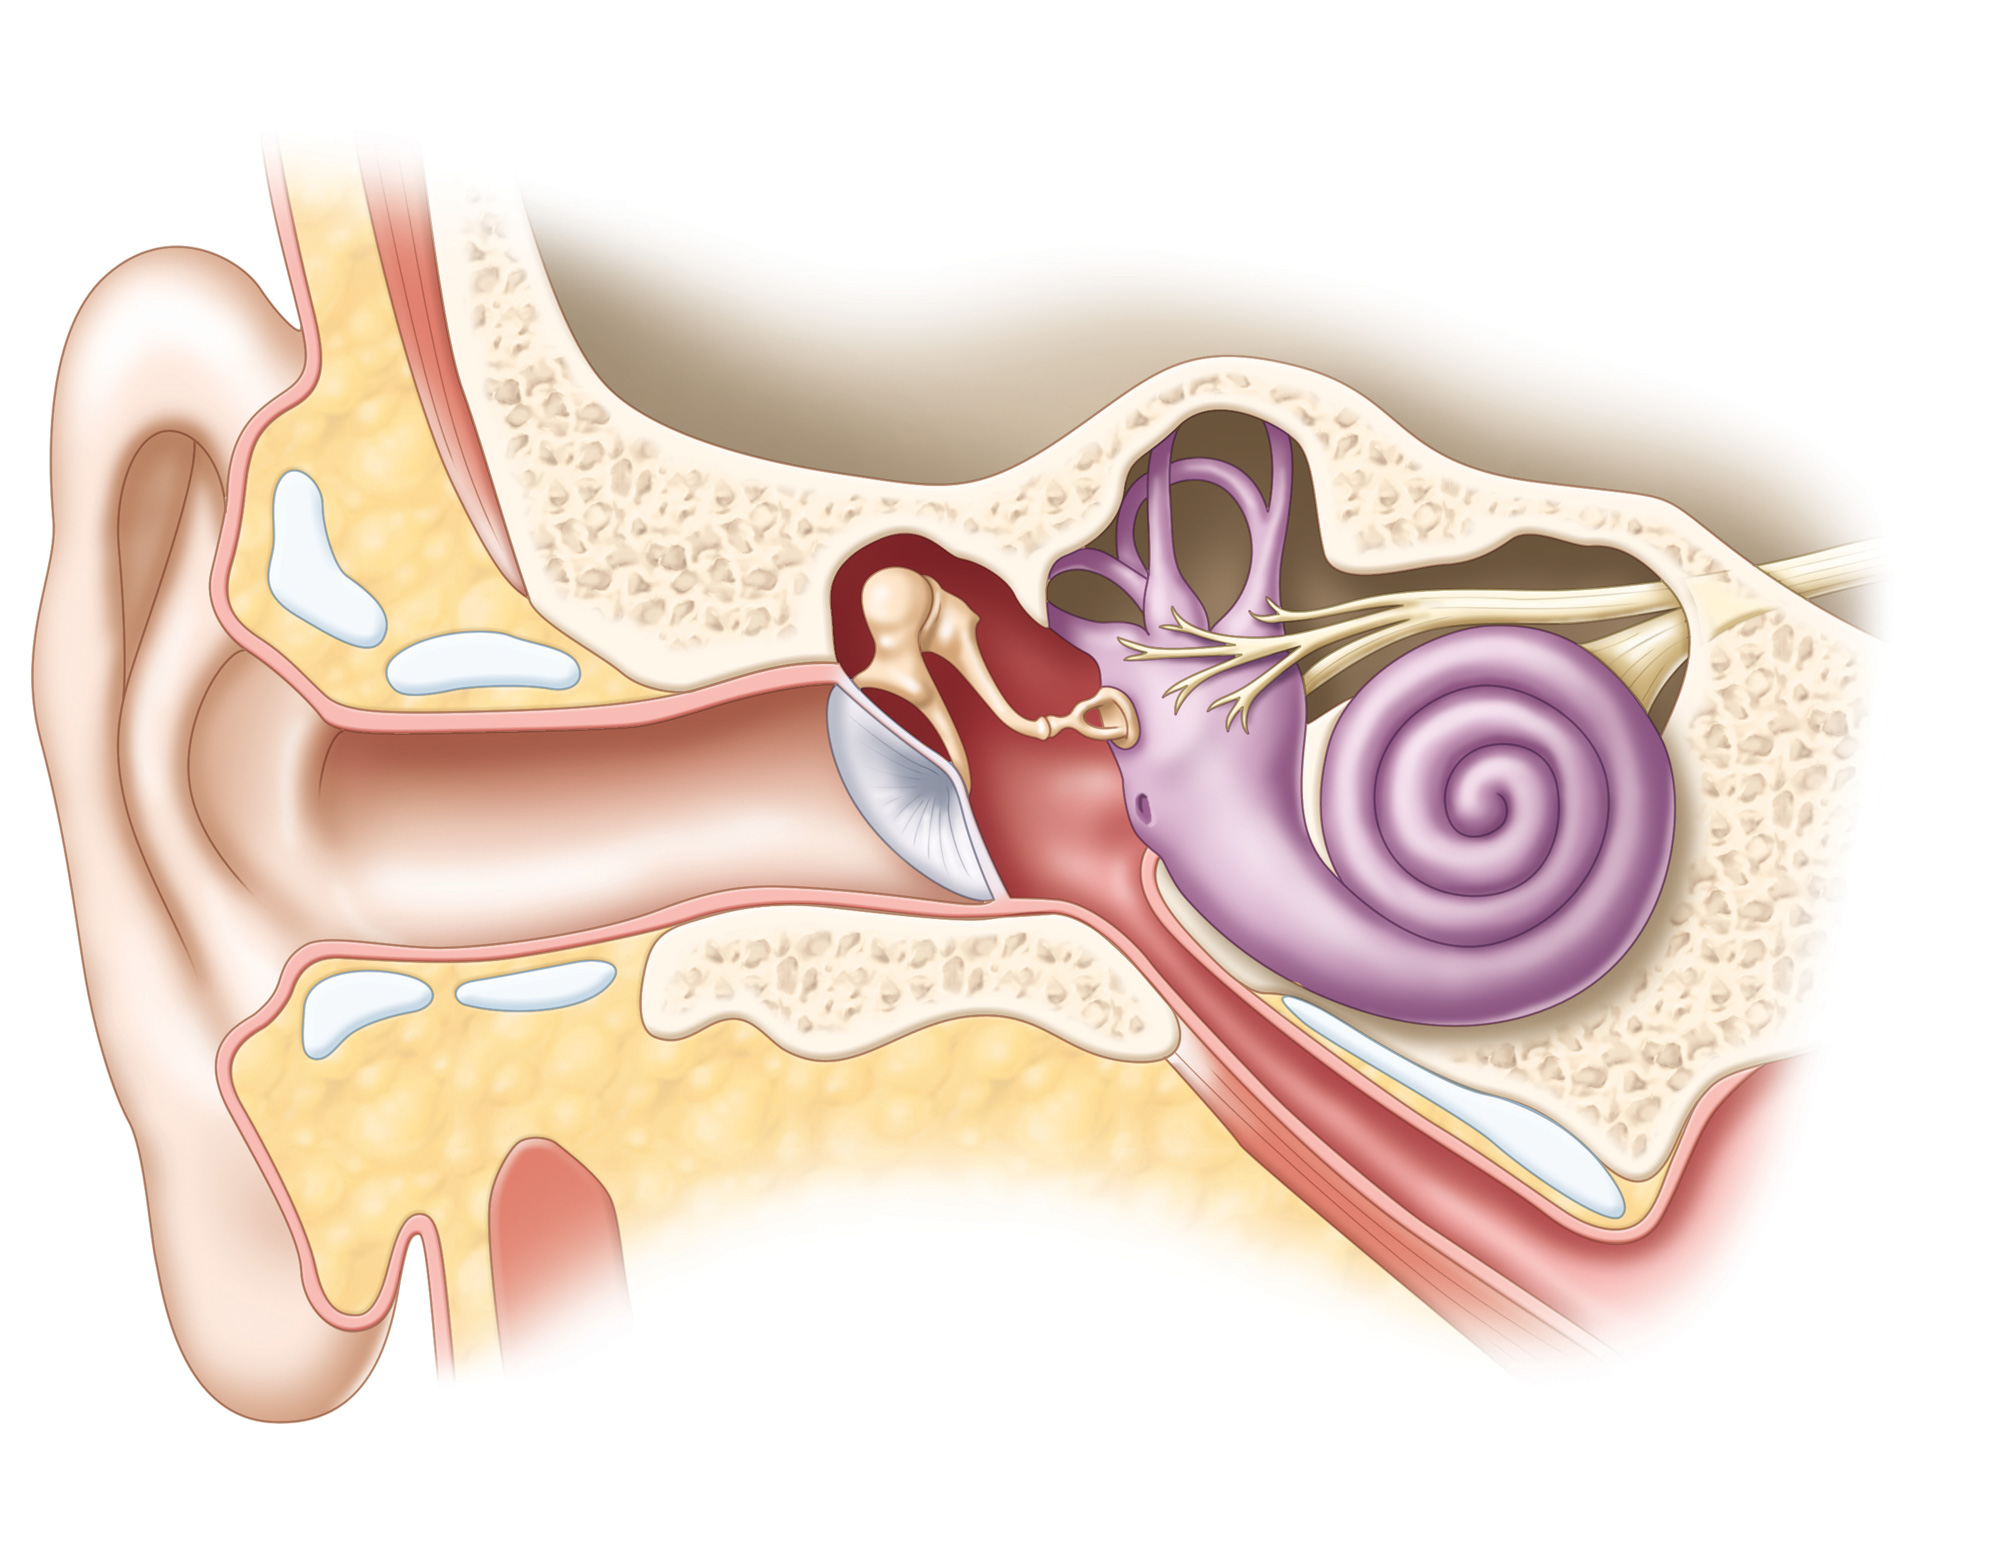 Inner Ear anatomy